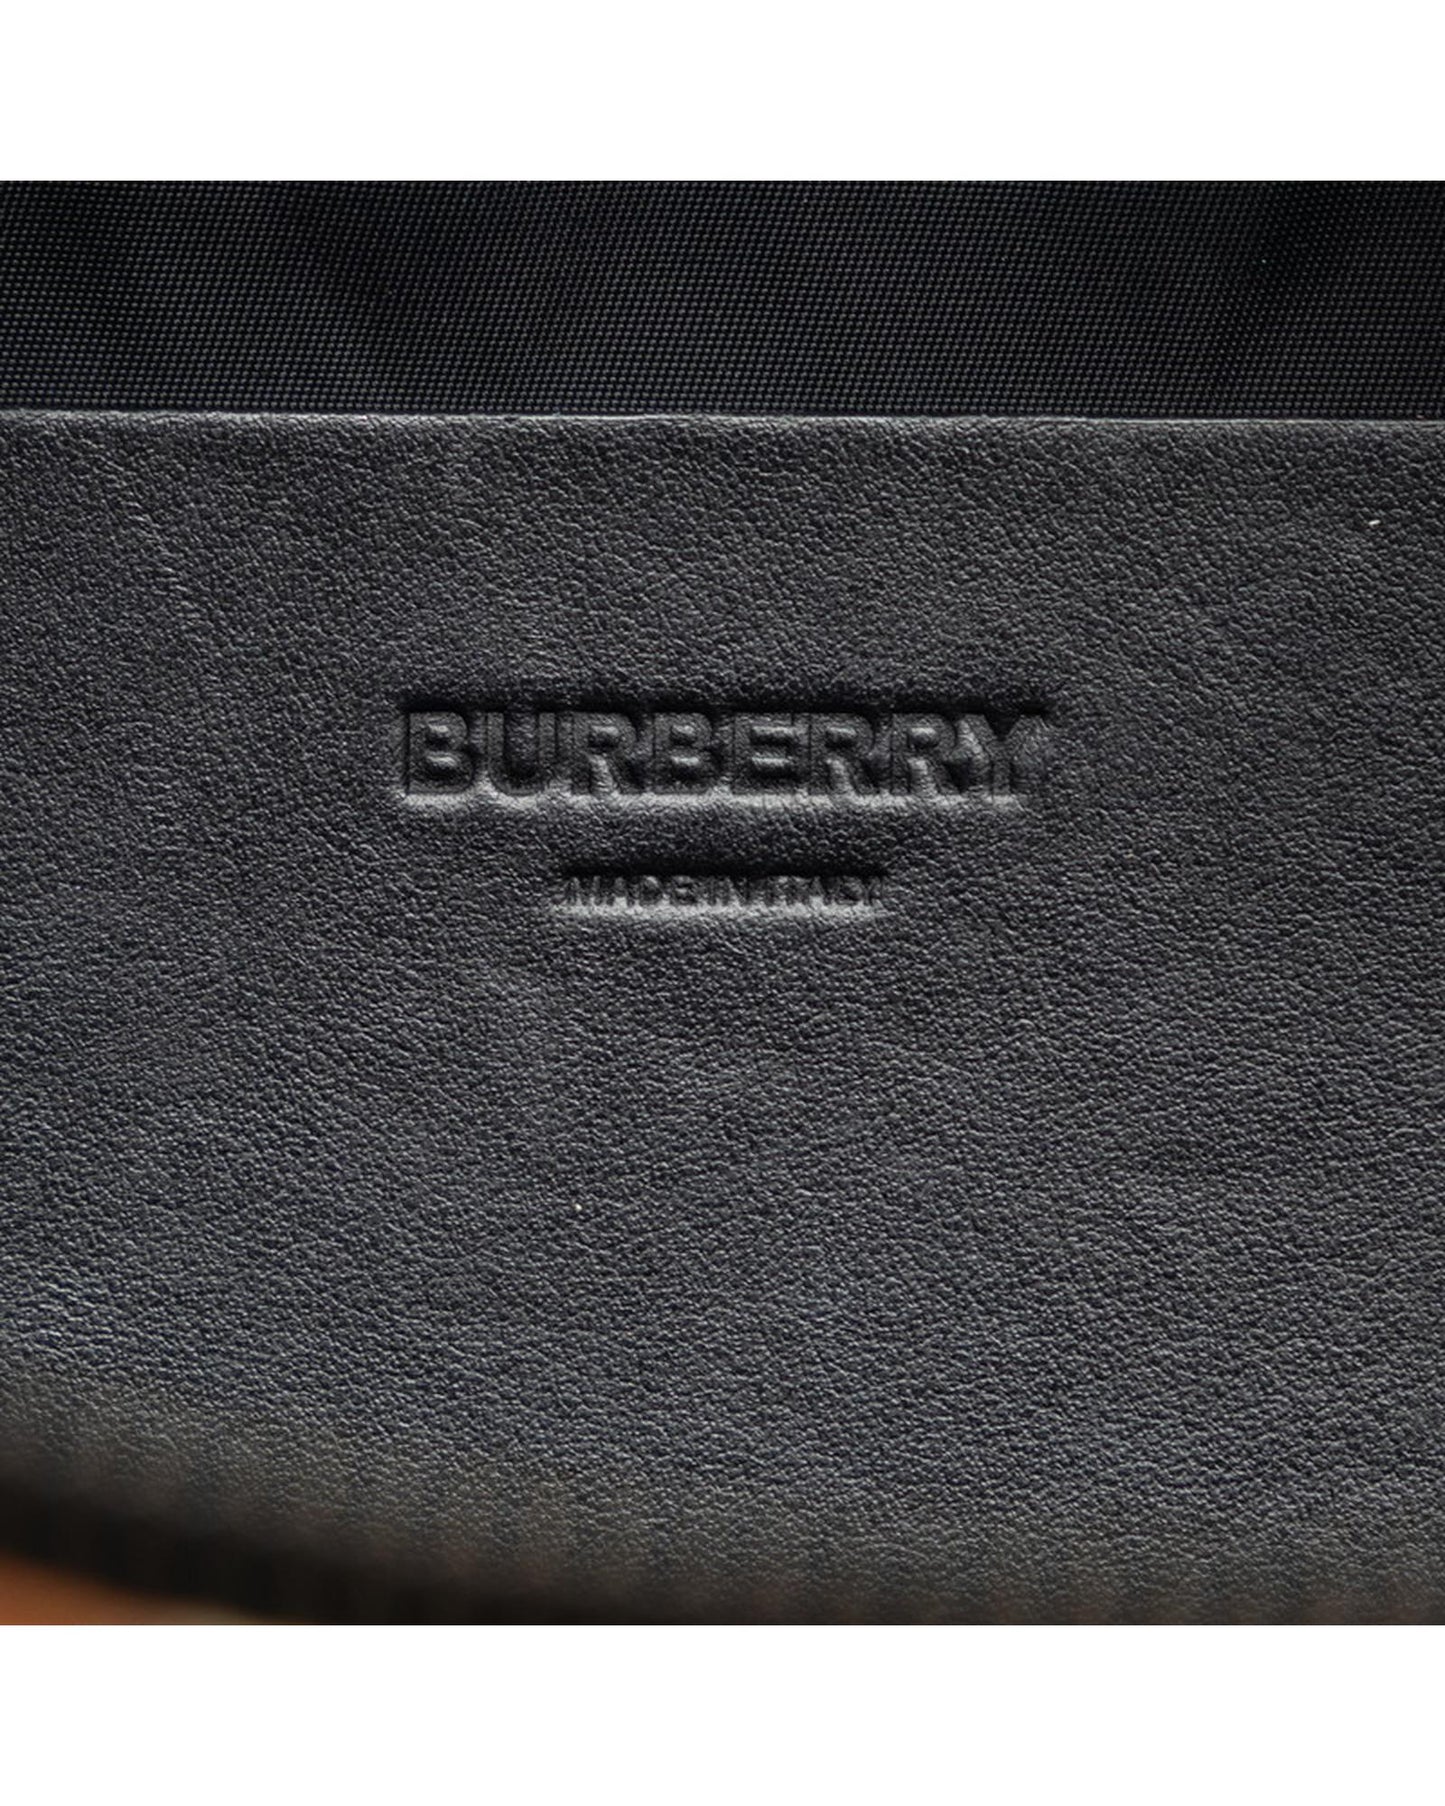 Burberry Women's Nylon Printed Belt Bag in Brown in Brown